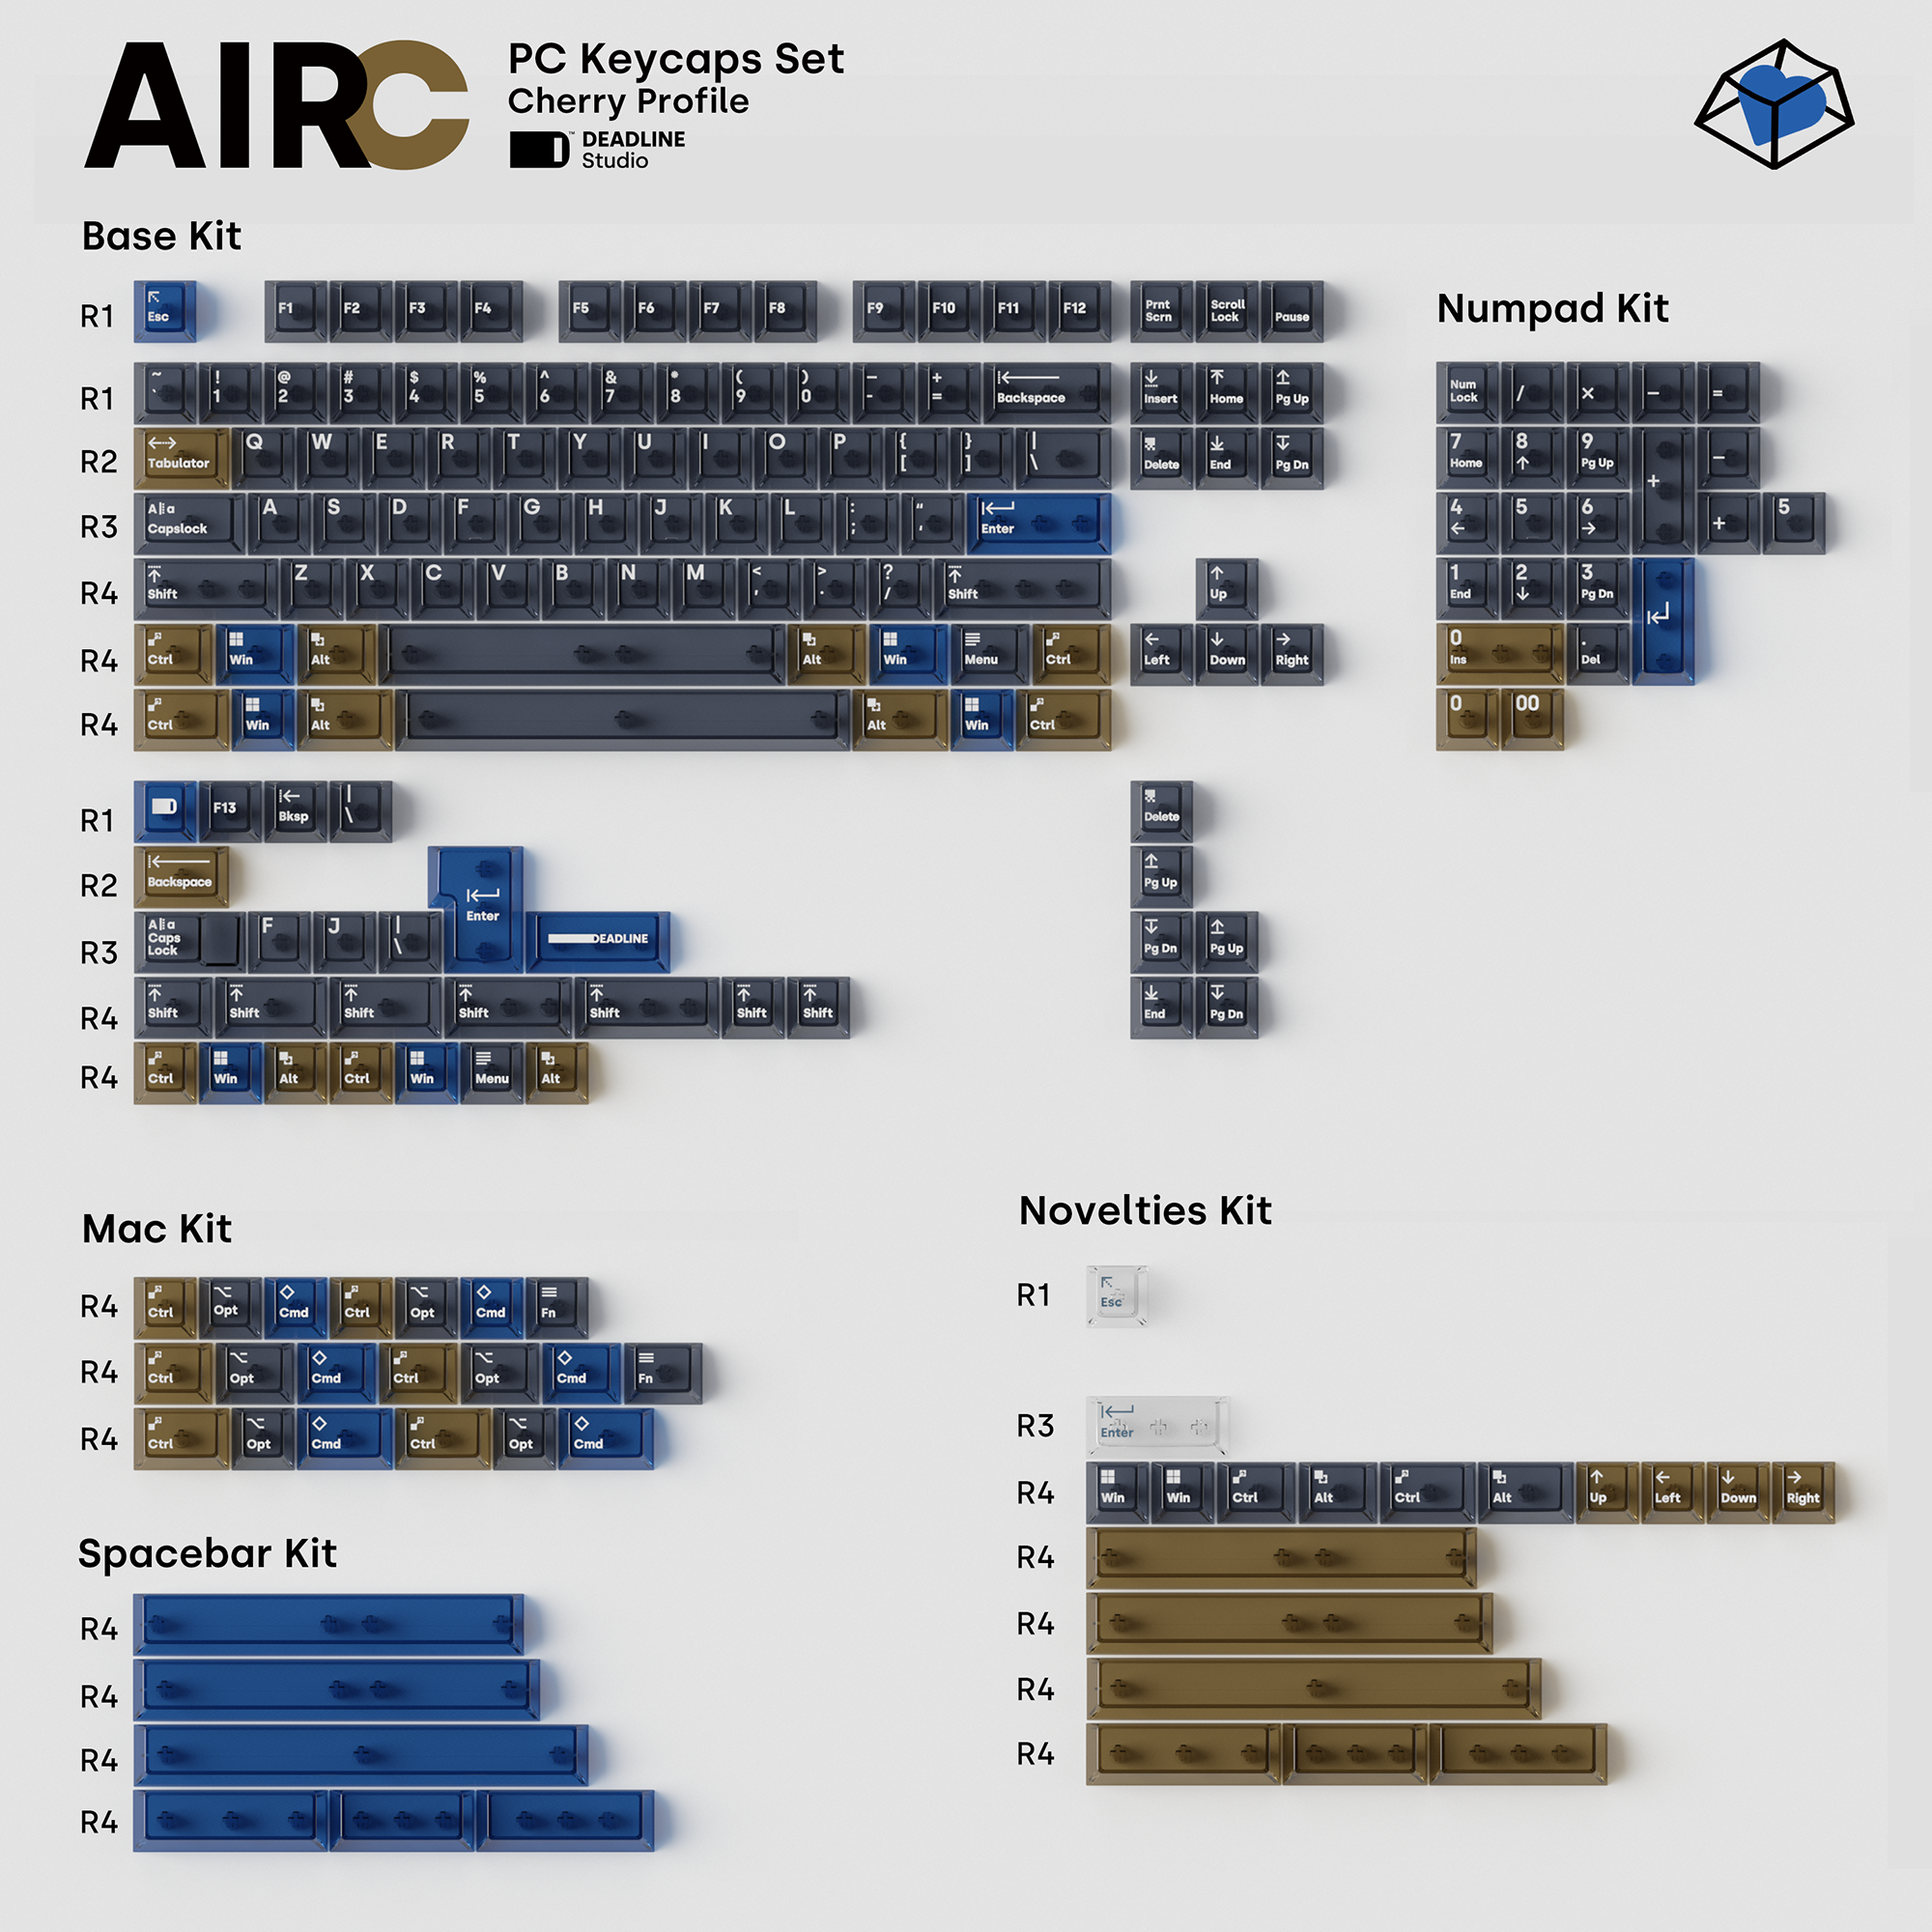 Deadline AirC PC Keycaps